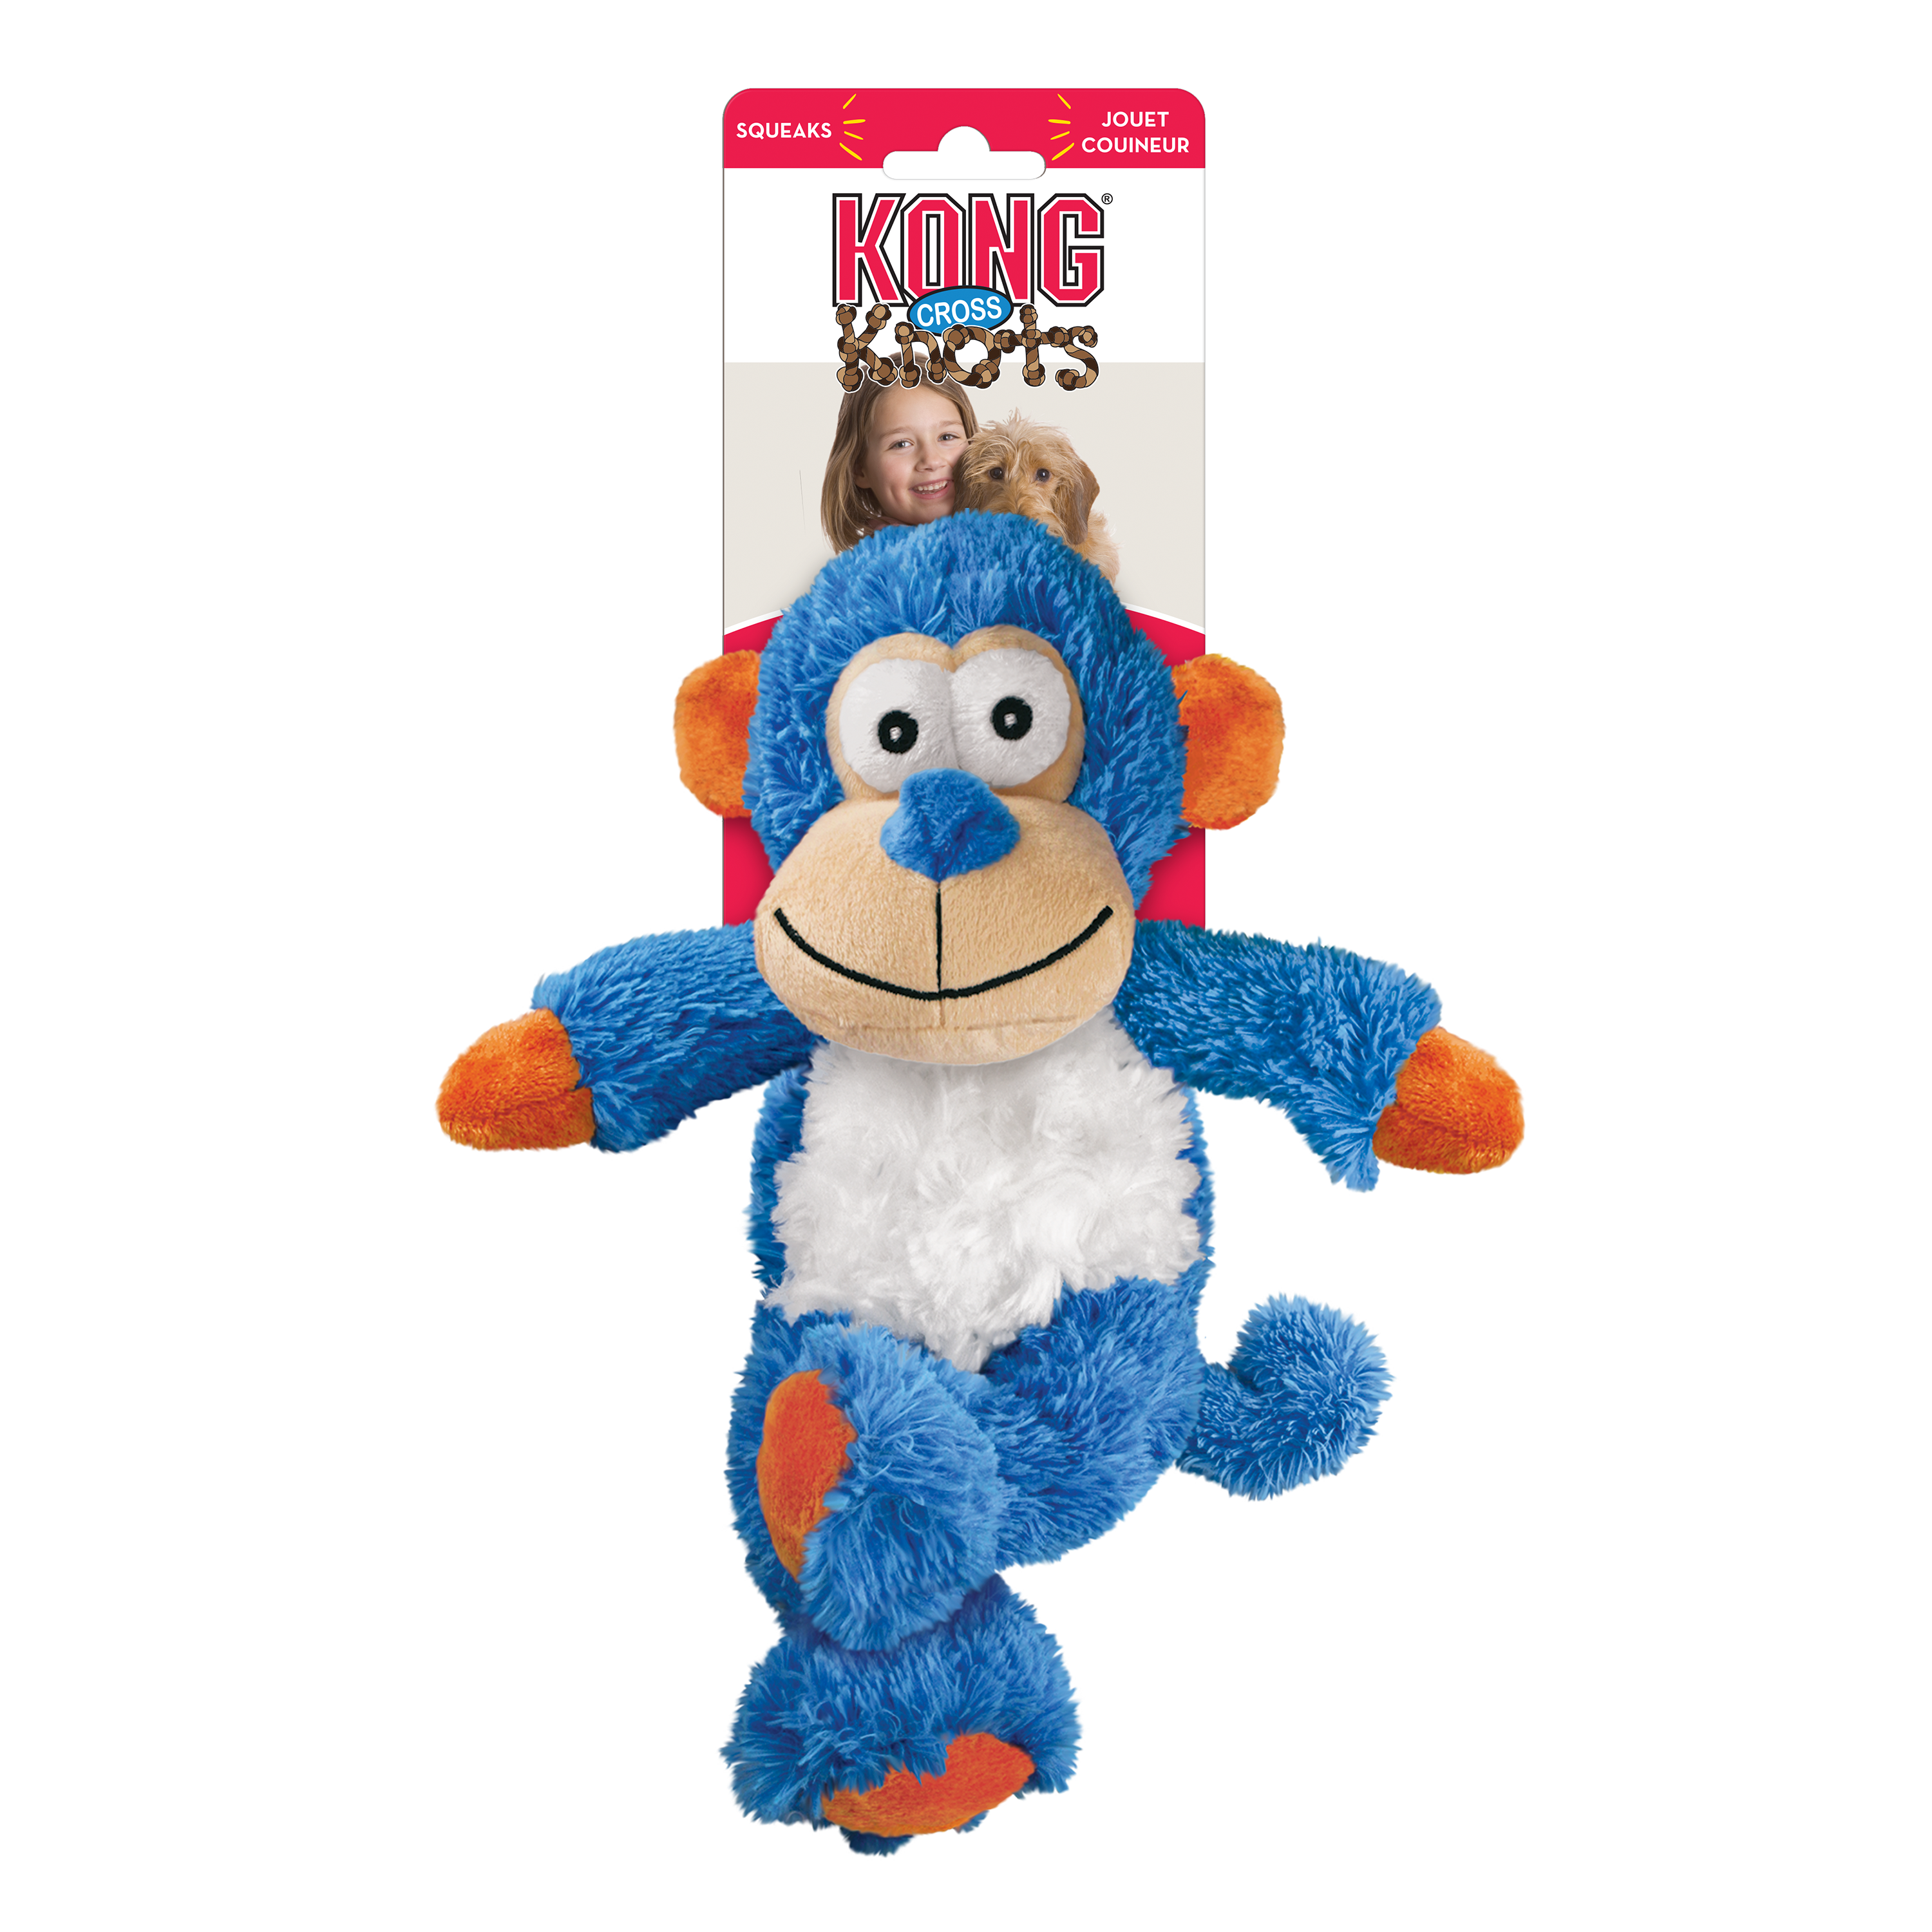 Cross Knots Monkey onpack product image